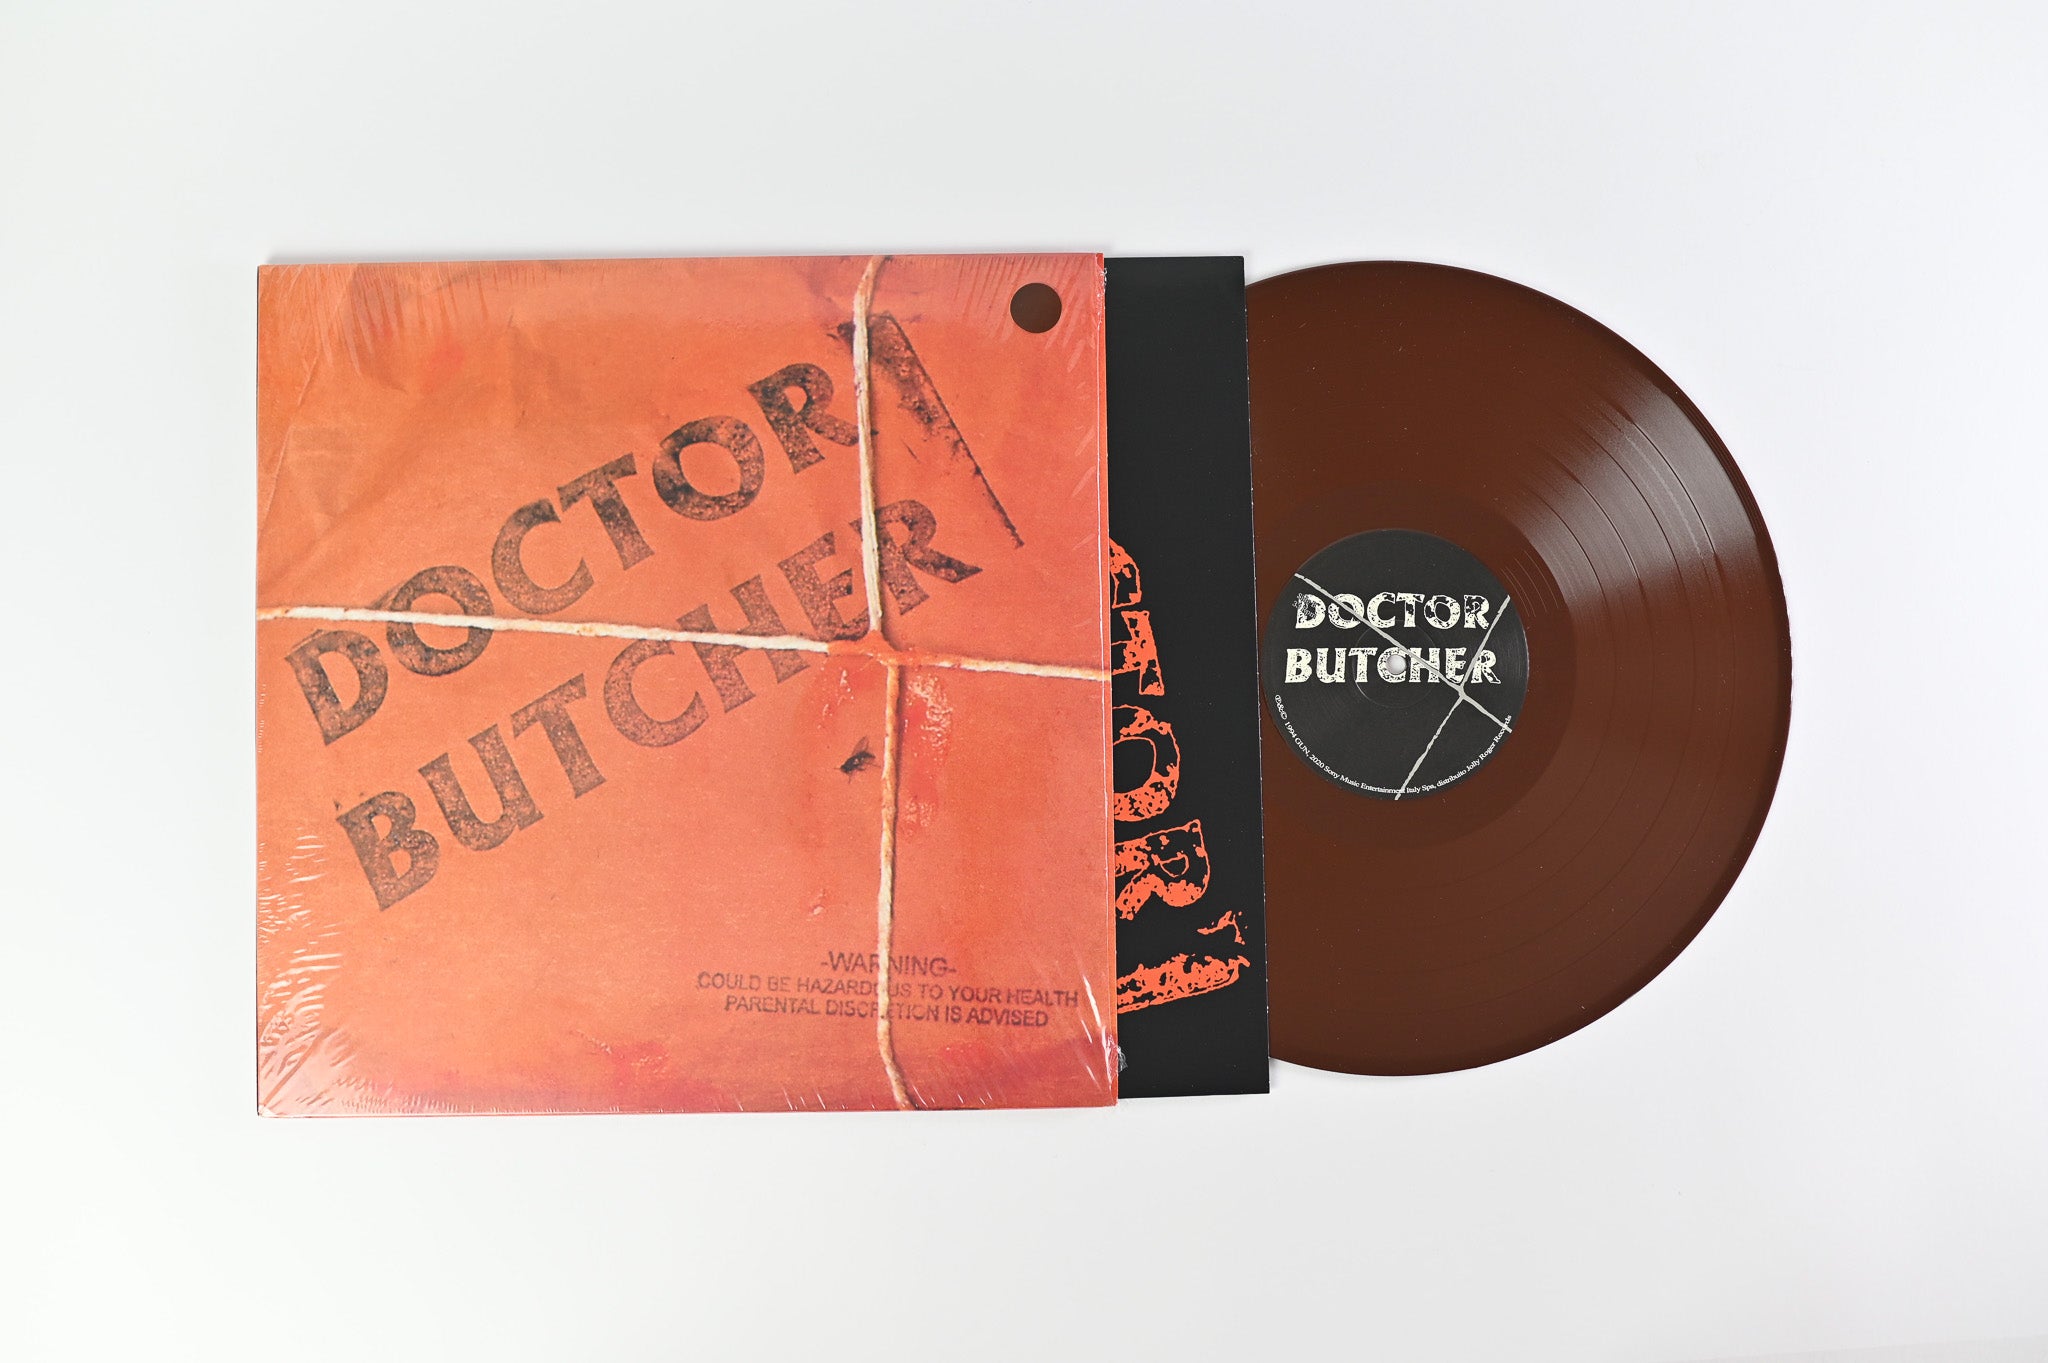 Doctor Butcher - Doctor Butcher Limited Reissue on Blackbeard-Jolly Roger Records Brown Vinyl